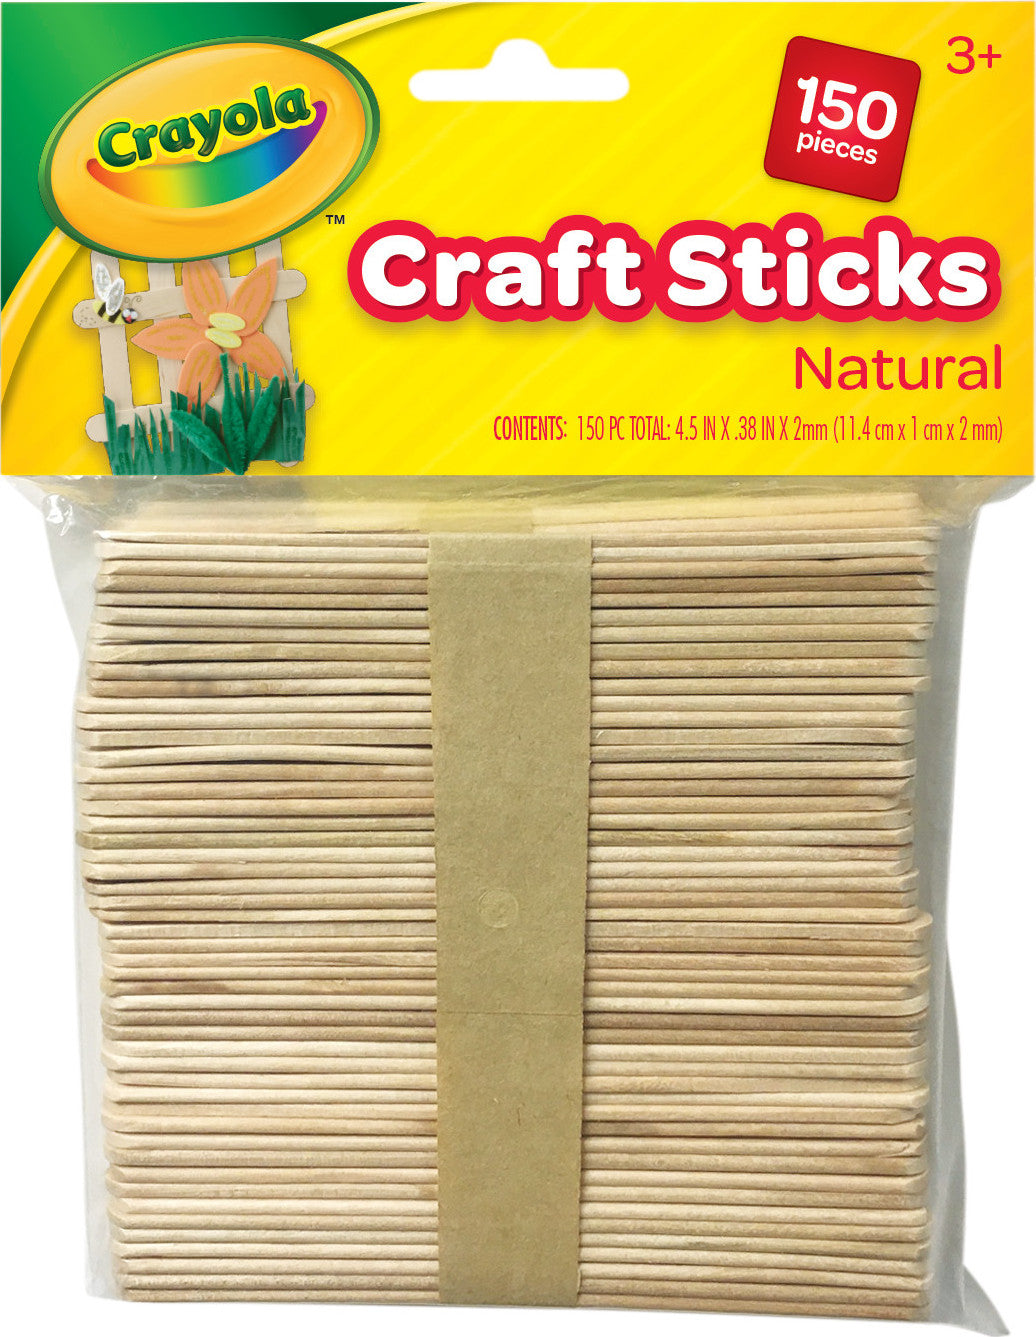 Natural Craft Sticks